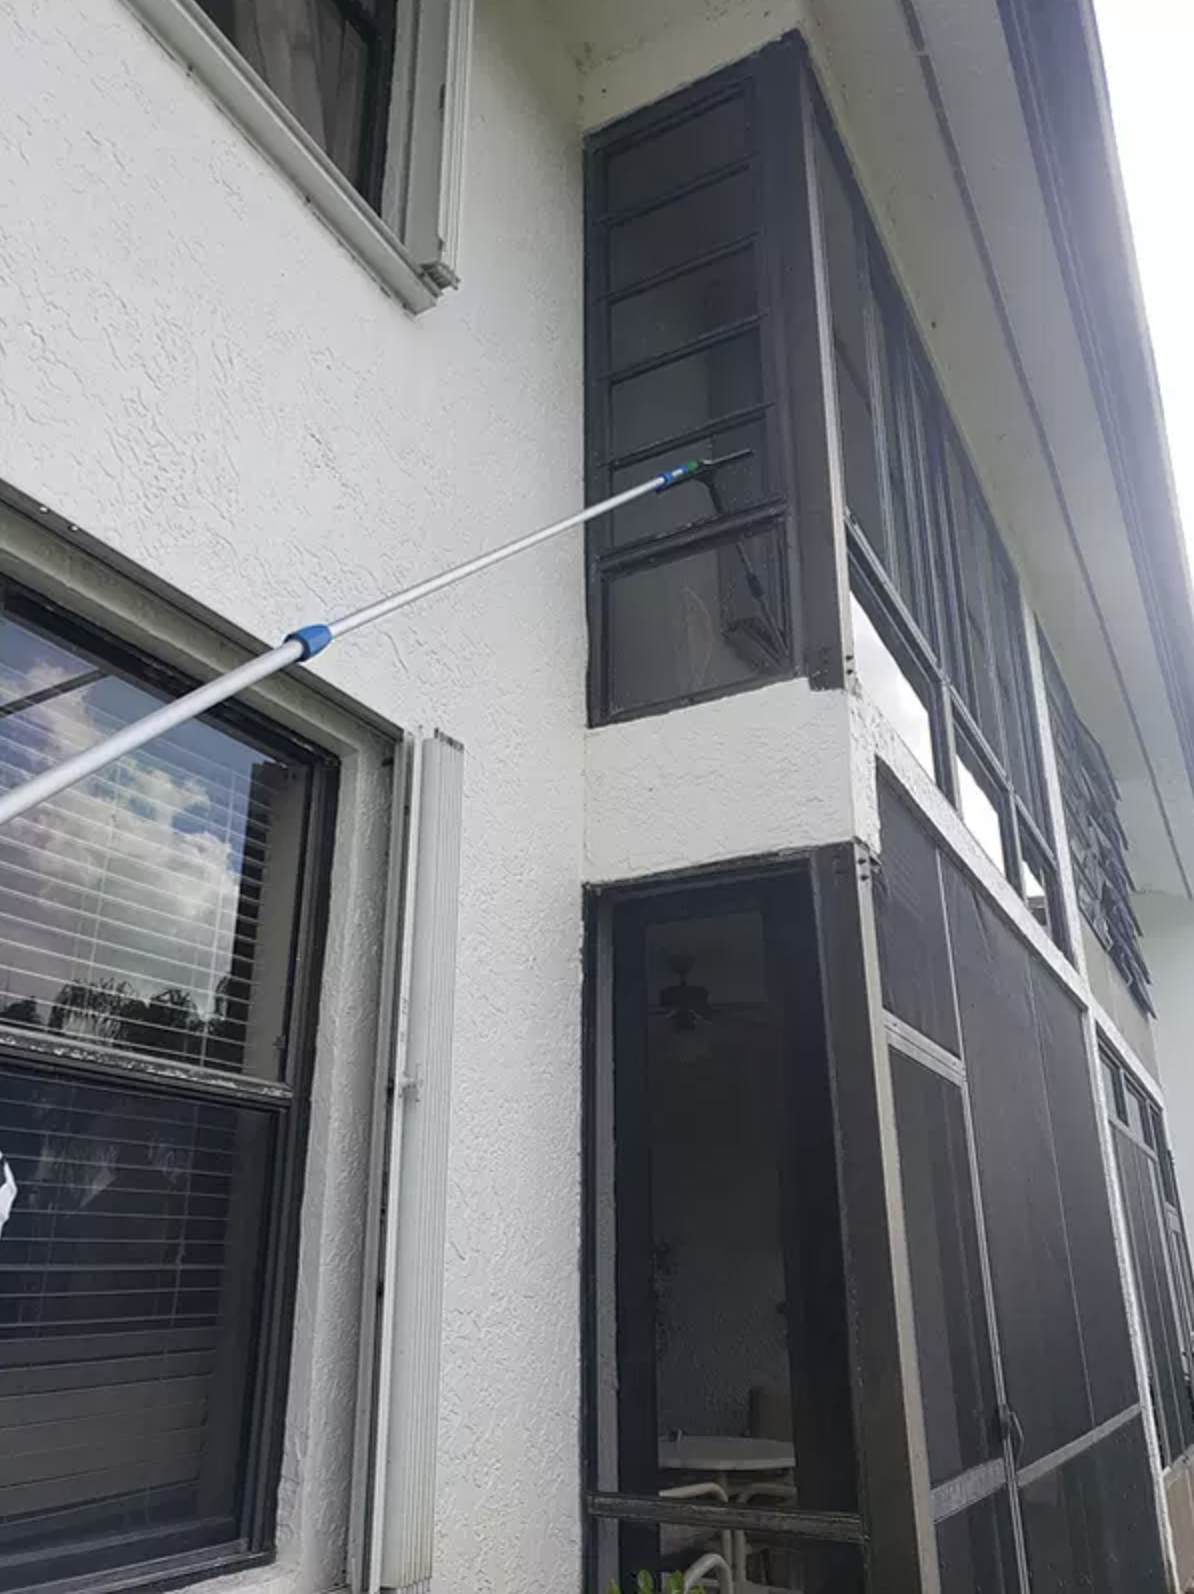 Window Cleaning Pole